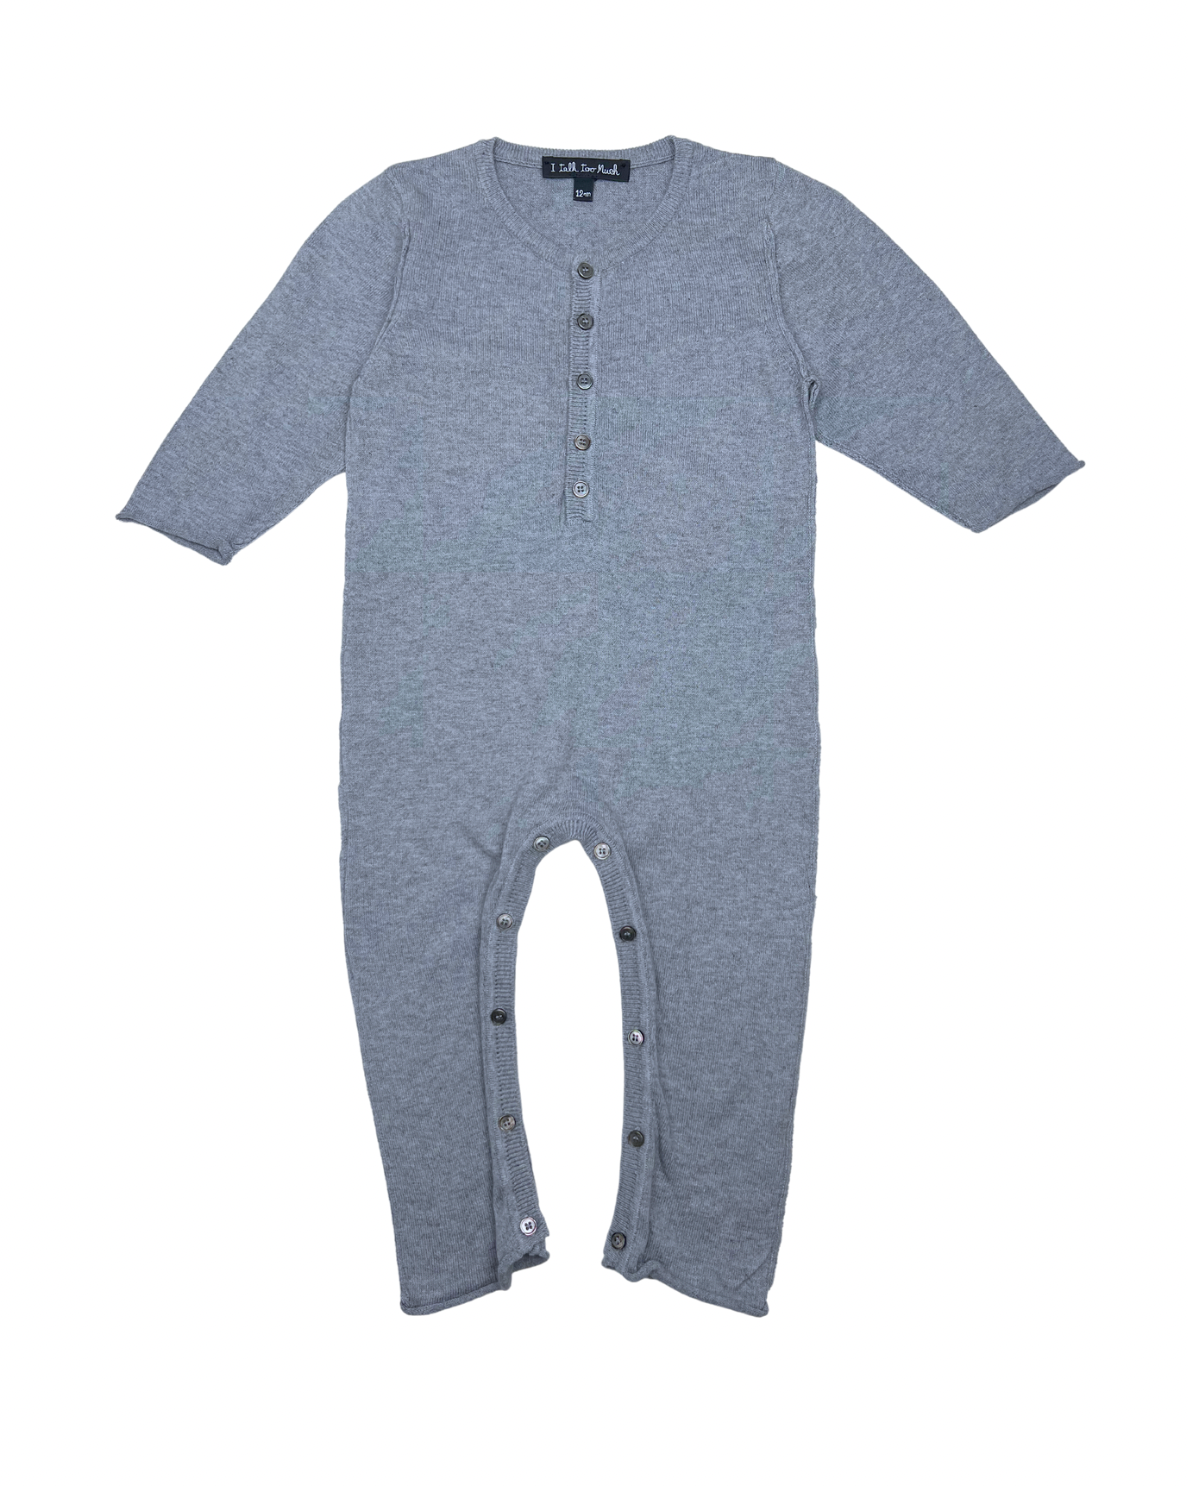 I TALK TO MUCH - Pyjama gris doux - 12 mois